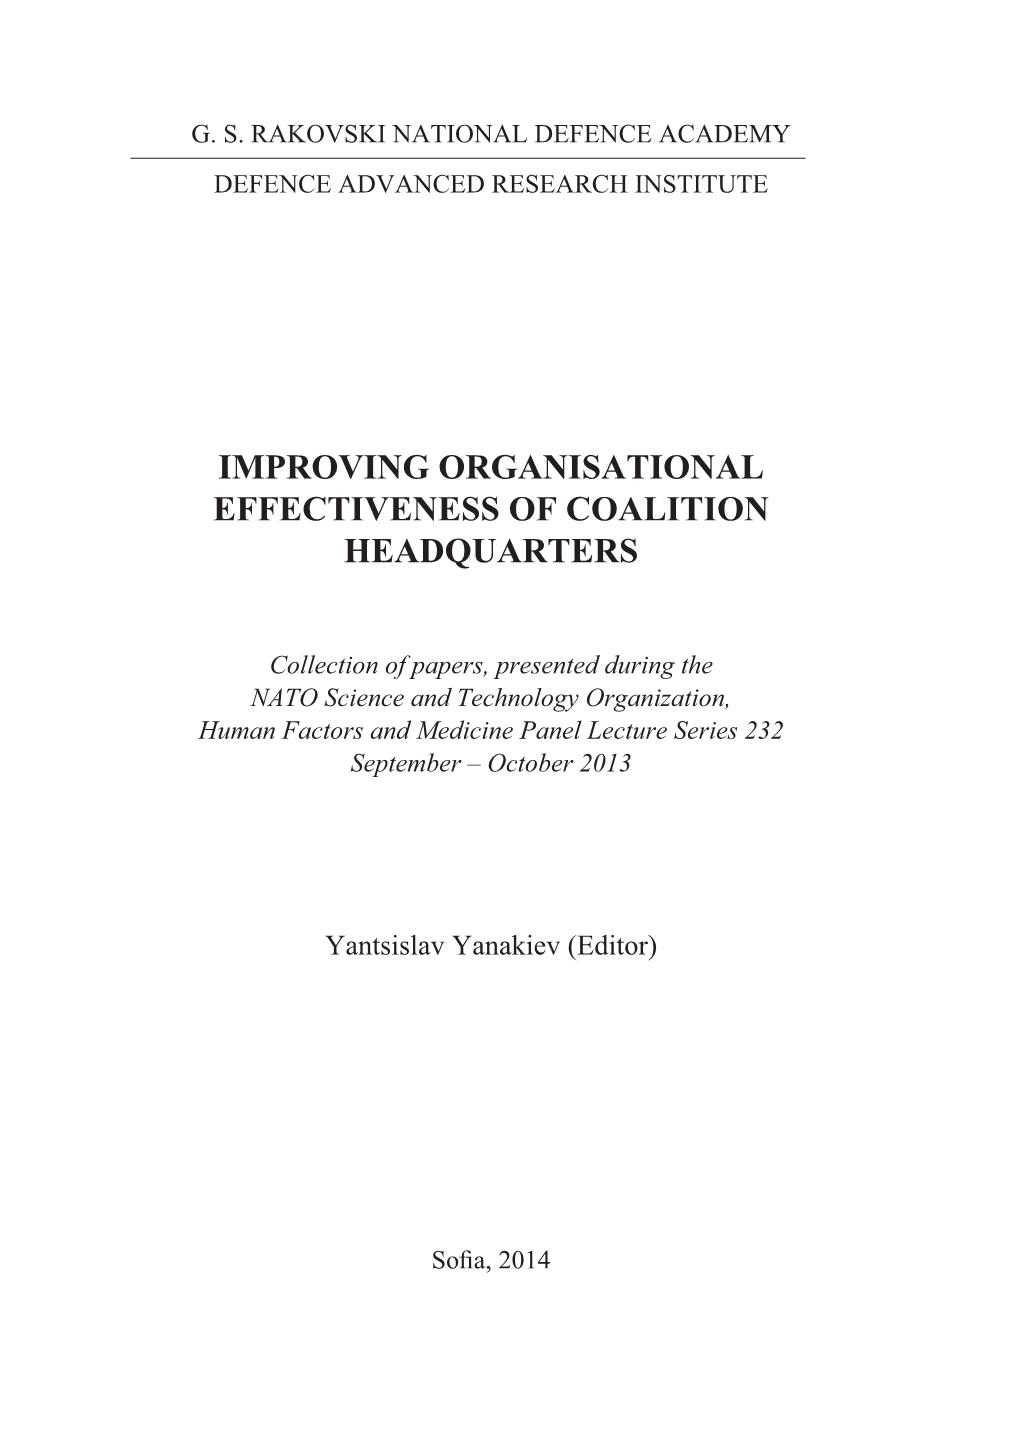 Improving Organisational Effectiveness of Coalition Headquarters